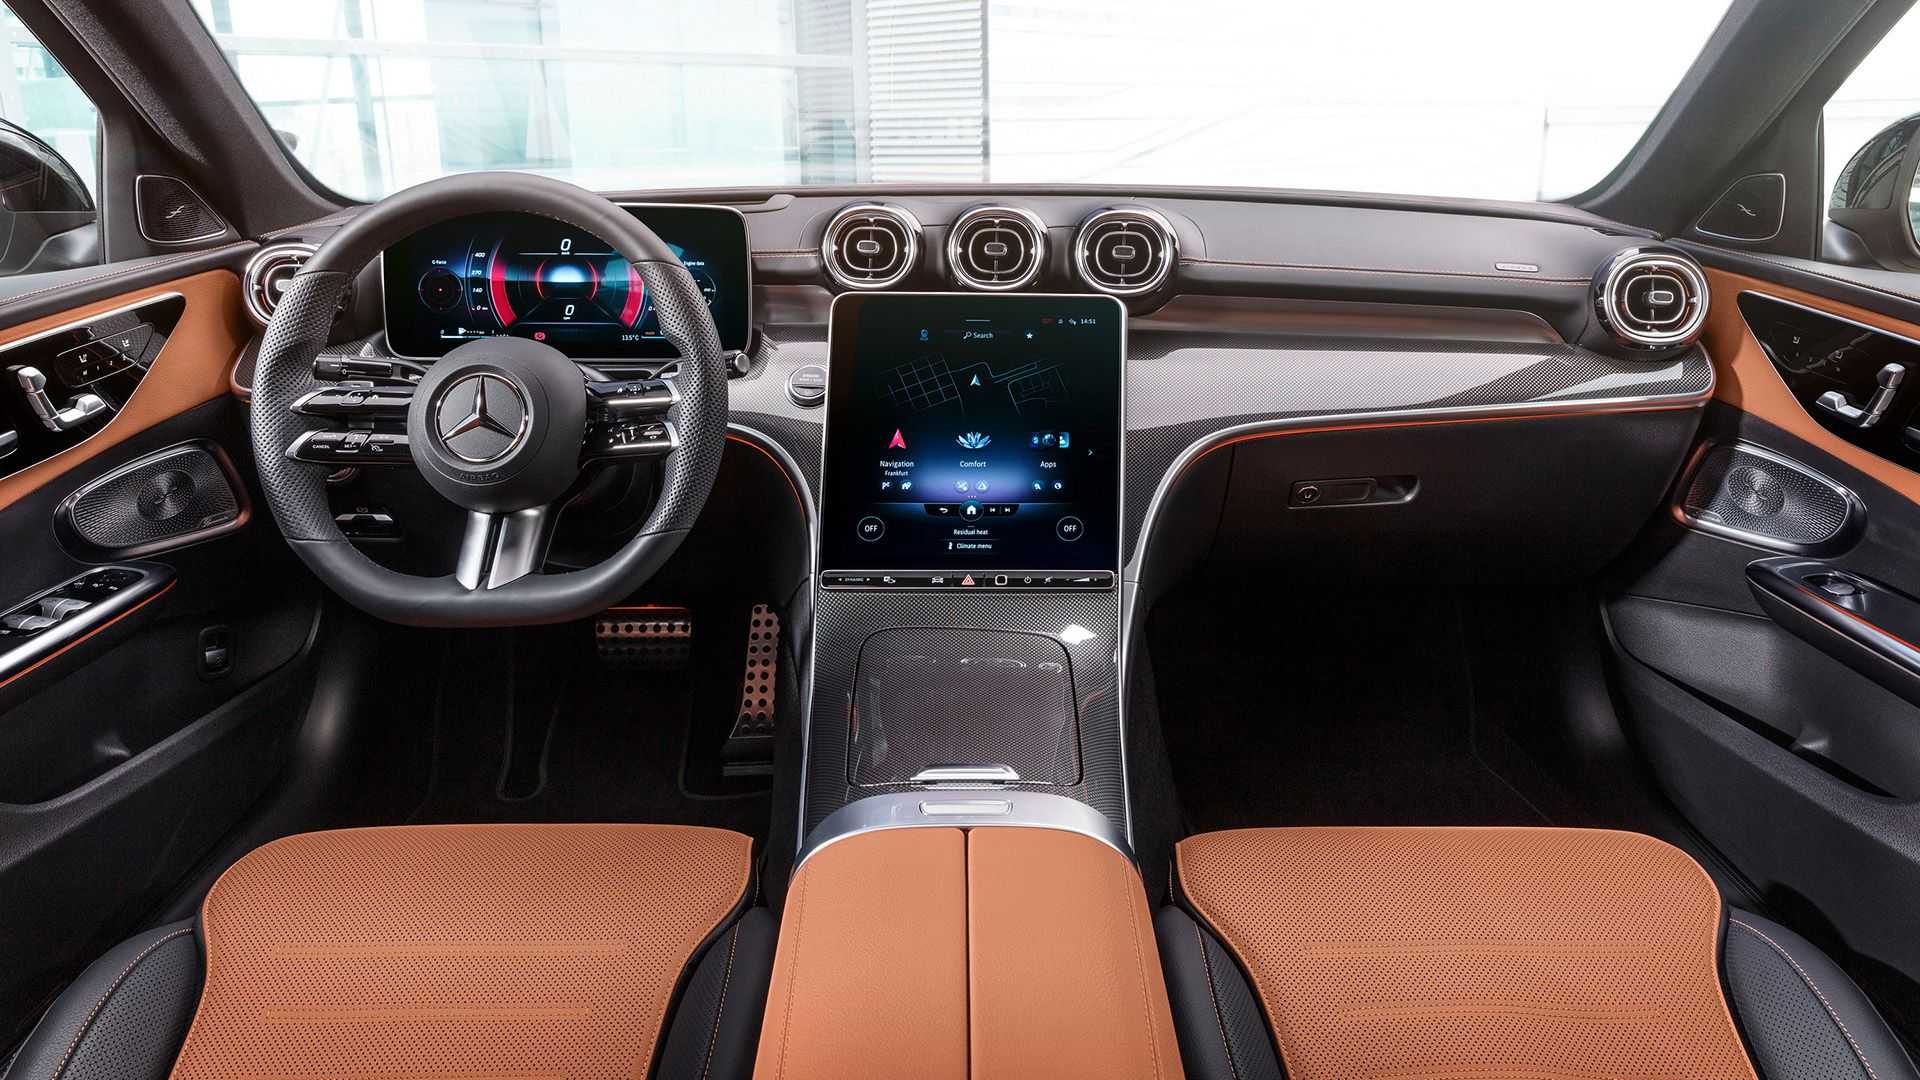 https://www.evocars-magazin.de/wp-content/uploads/2020/12/mercedes-c-klasse-limousine-2021-6.jpg